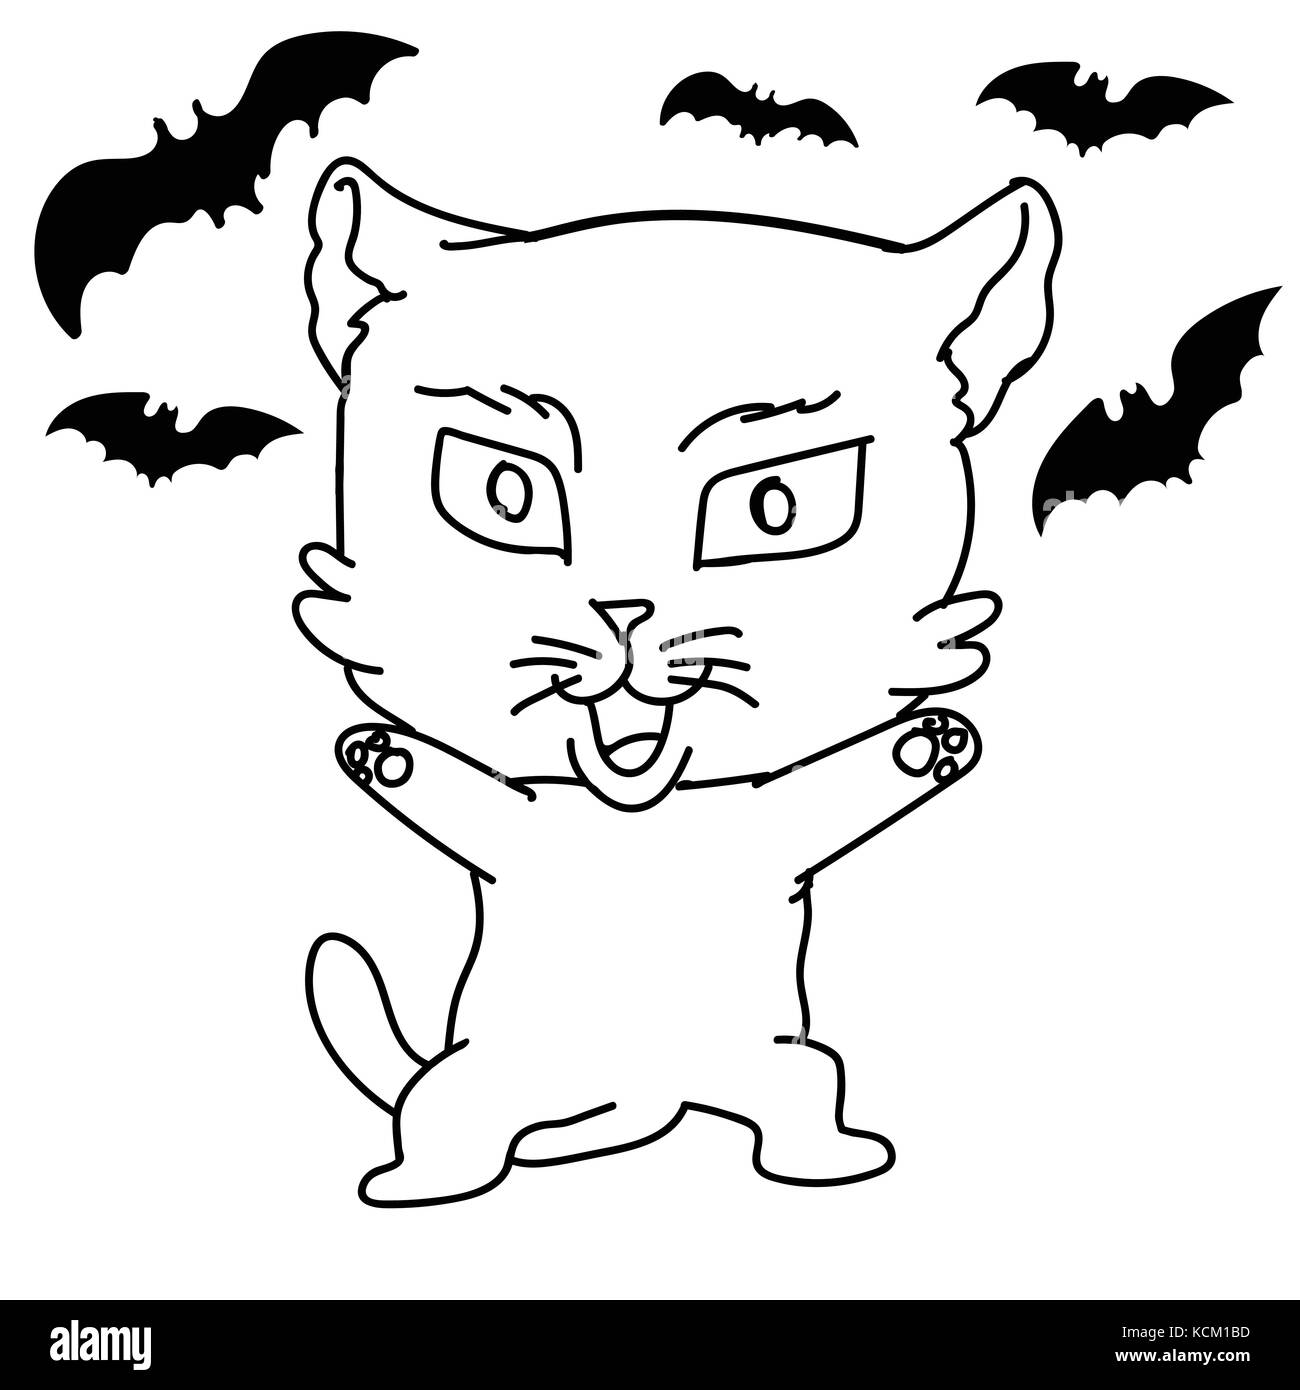 Bat cat Cut Out Stock Images & Pictures - Alamy